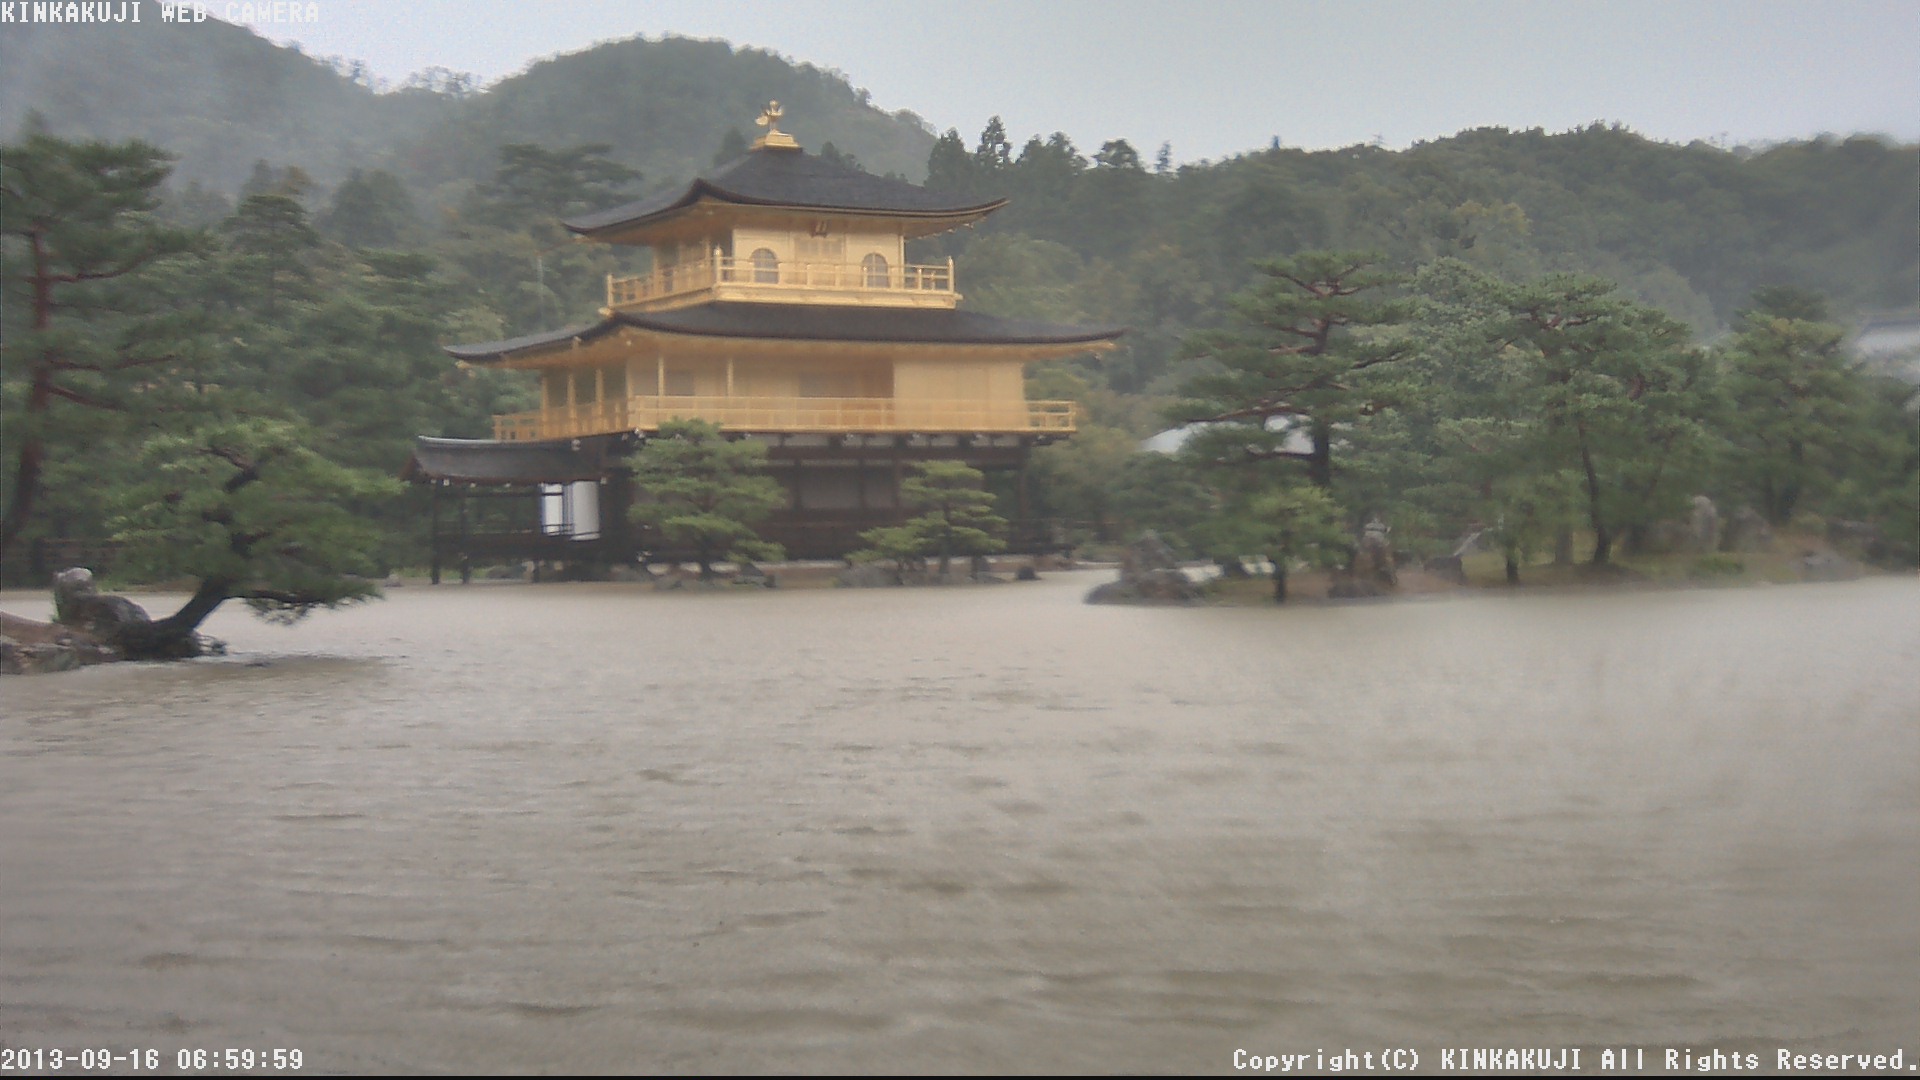 Kinkakuji with flooded pond